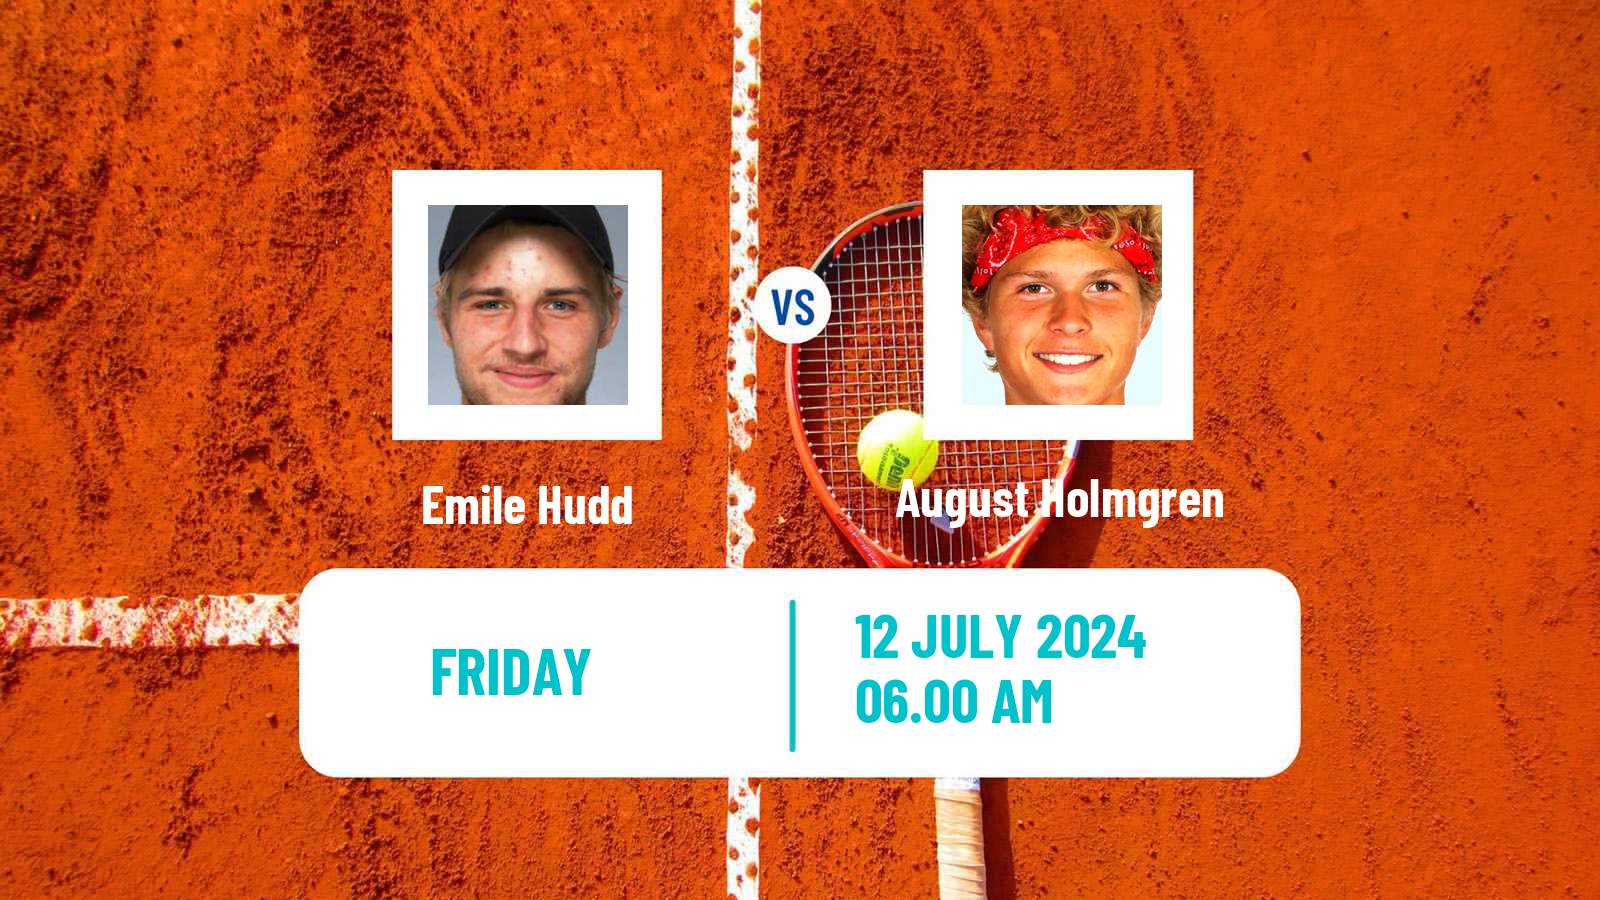 Tennis ITF M25 Nottingham 3 Men Emile Hudd - August Holmgren